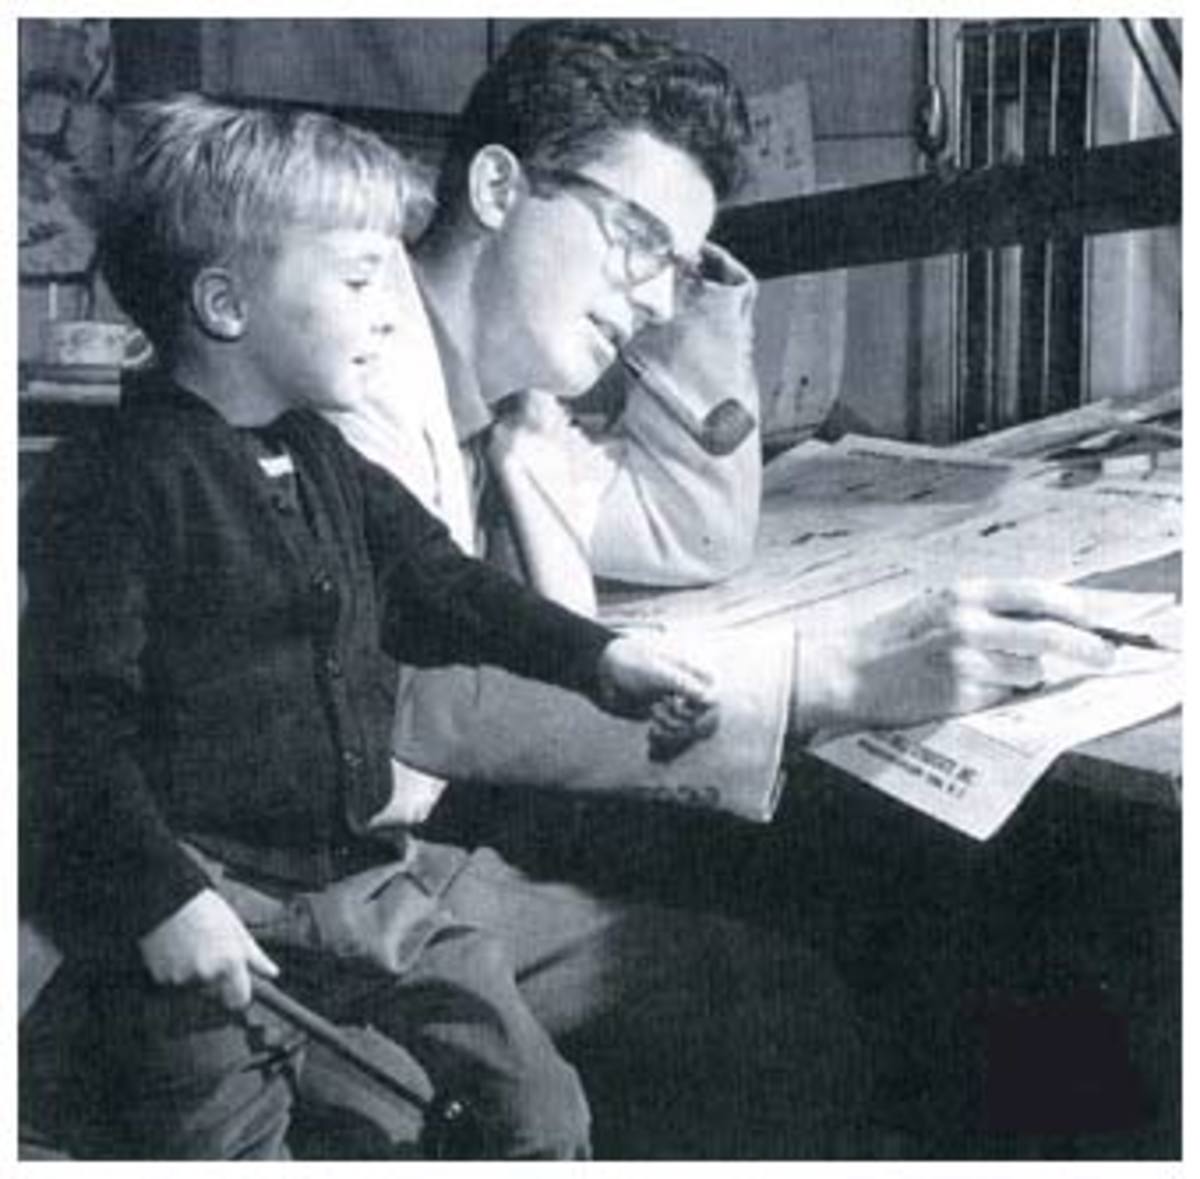 Hank Ketcham with his son Dennis